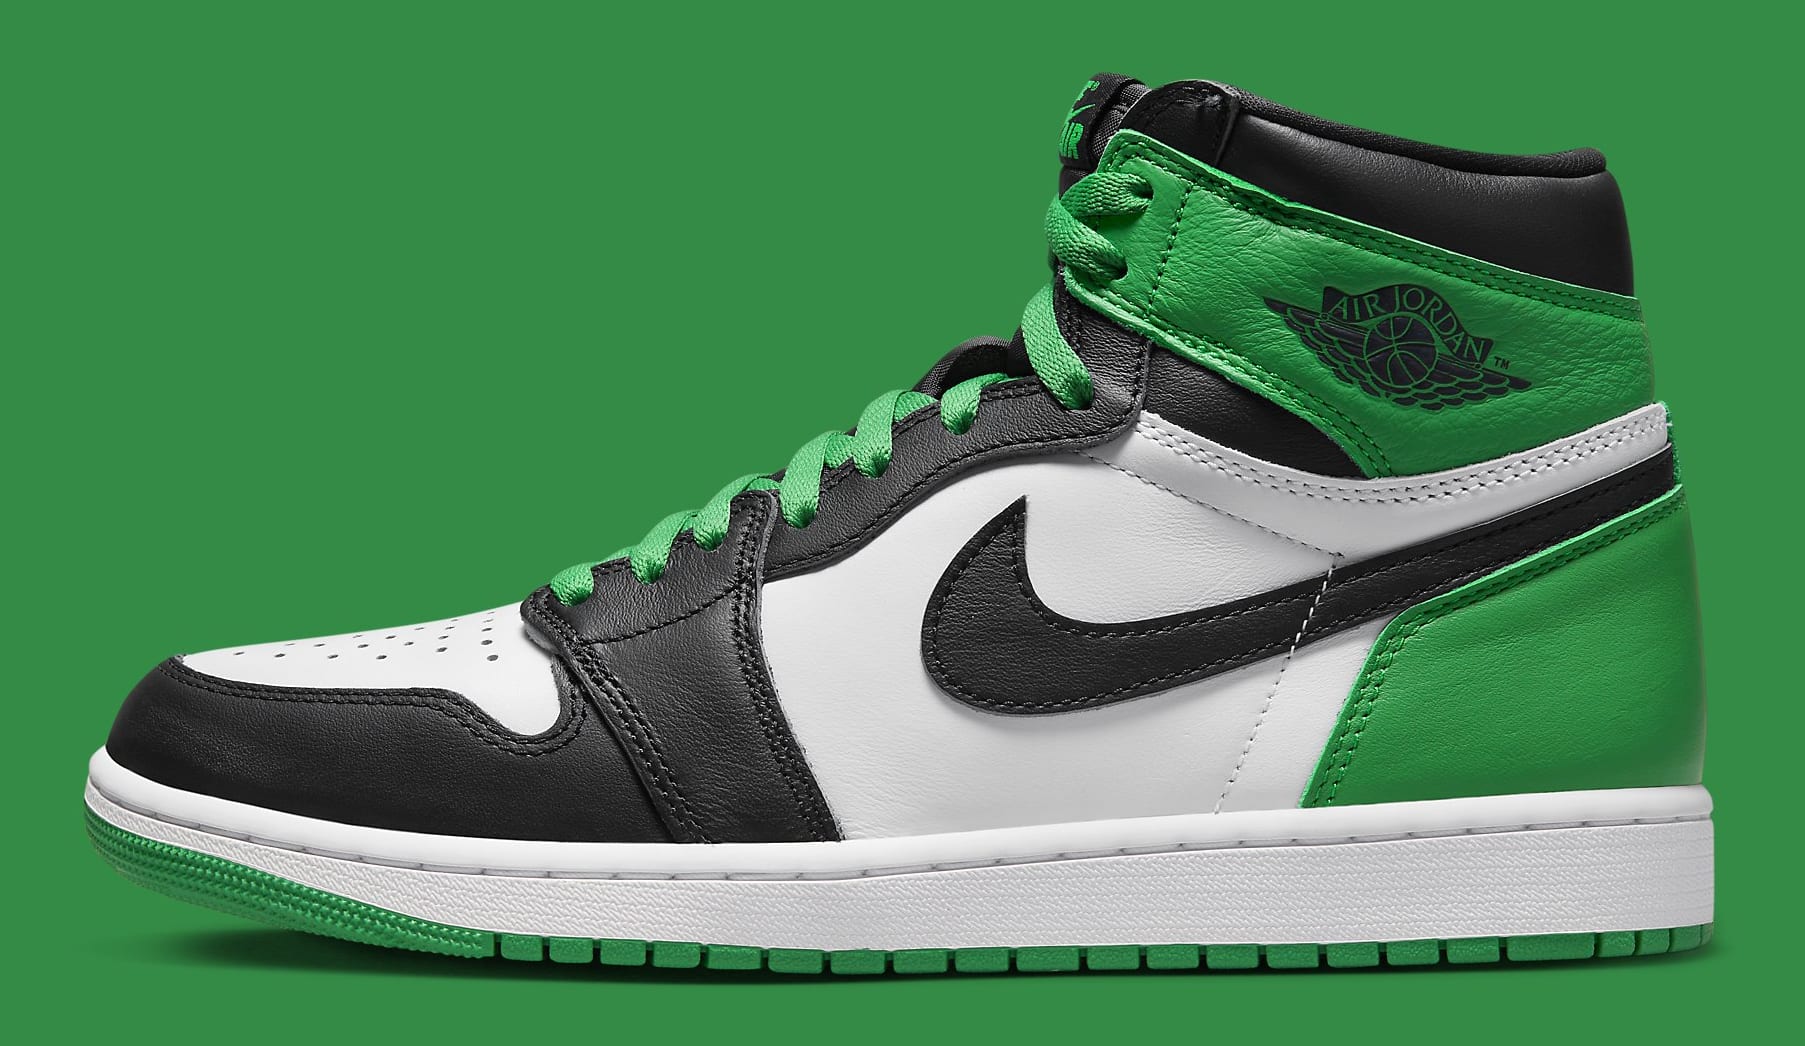 Detailed Look at the 'Lucky Green' Air Jordan 1 High Celtics-inspired